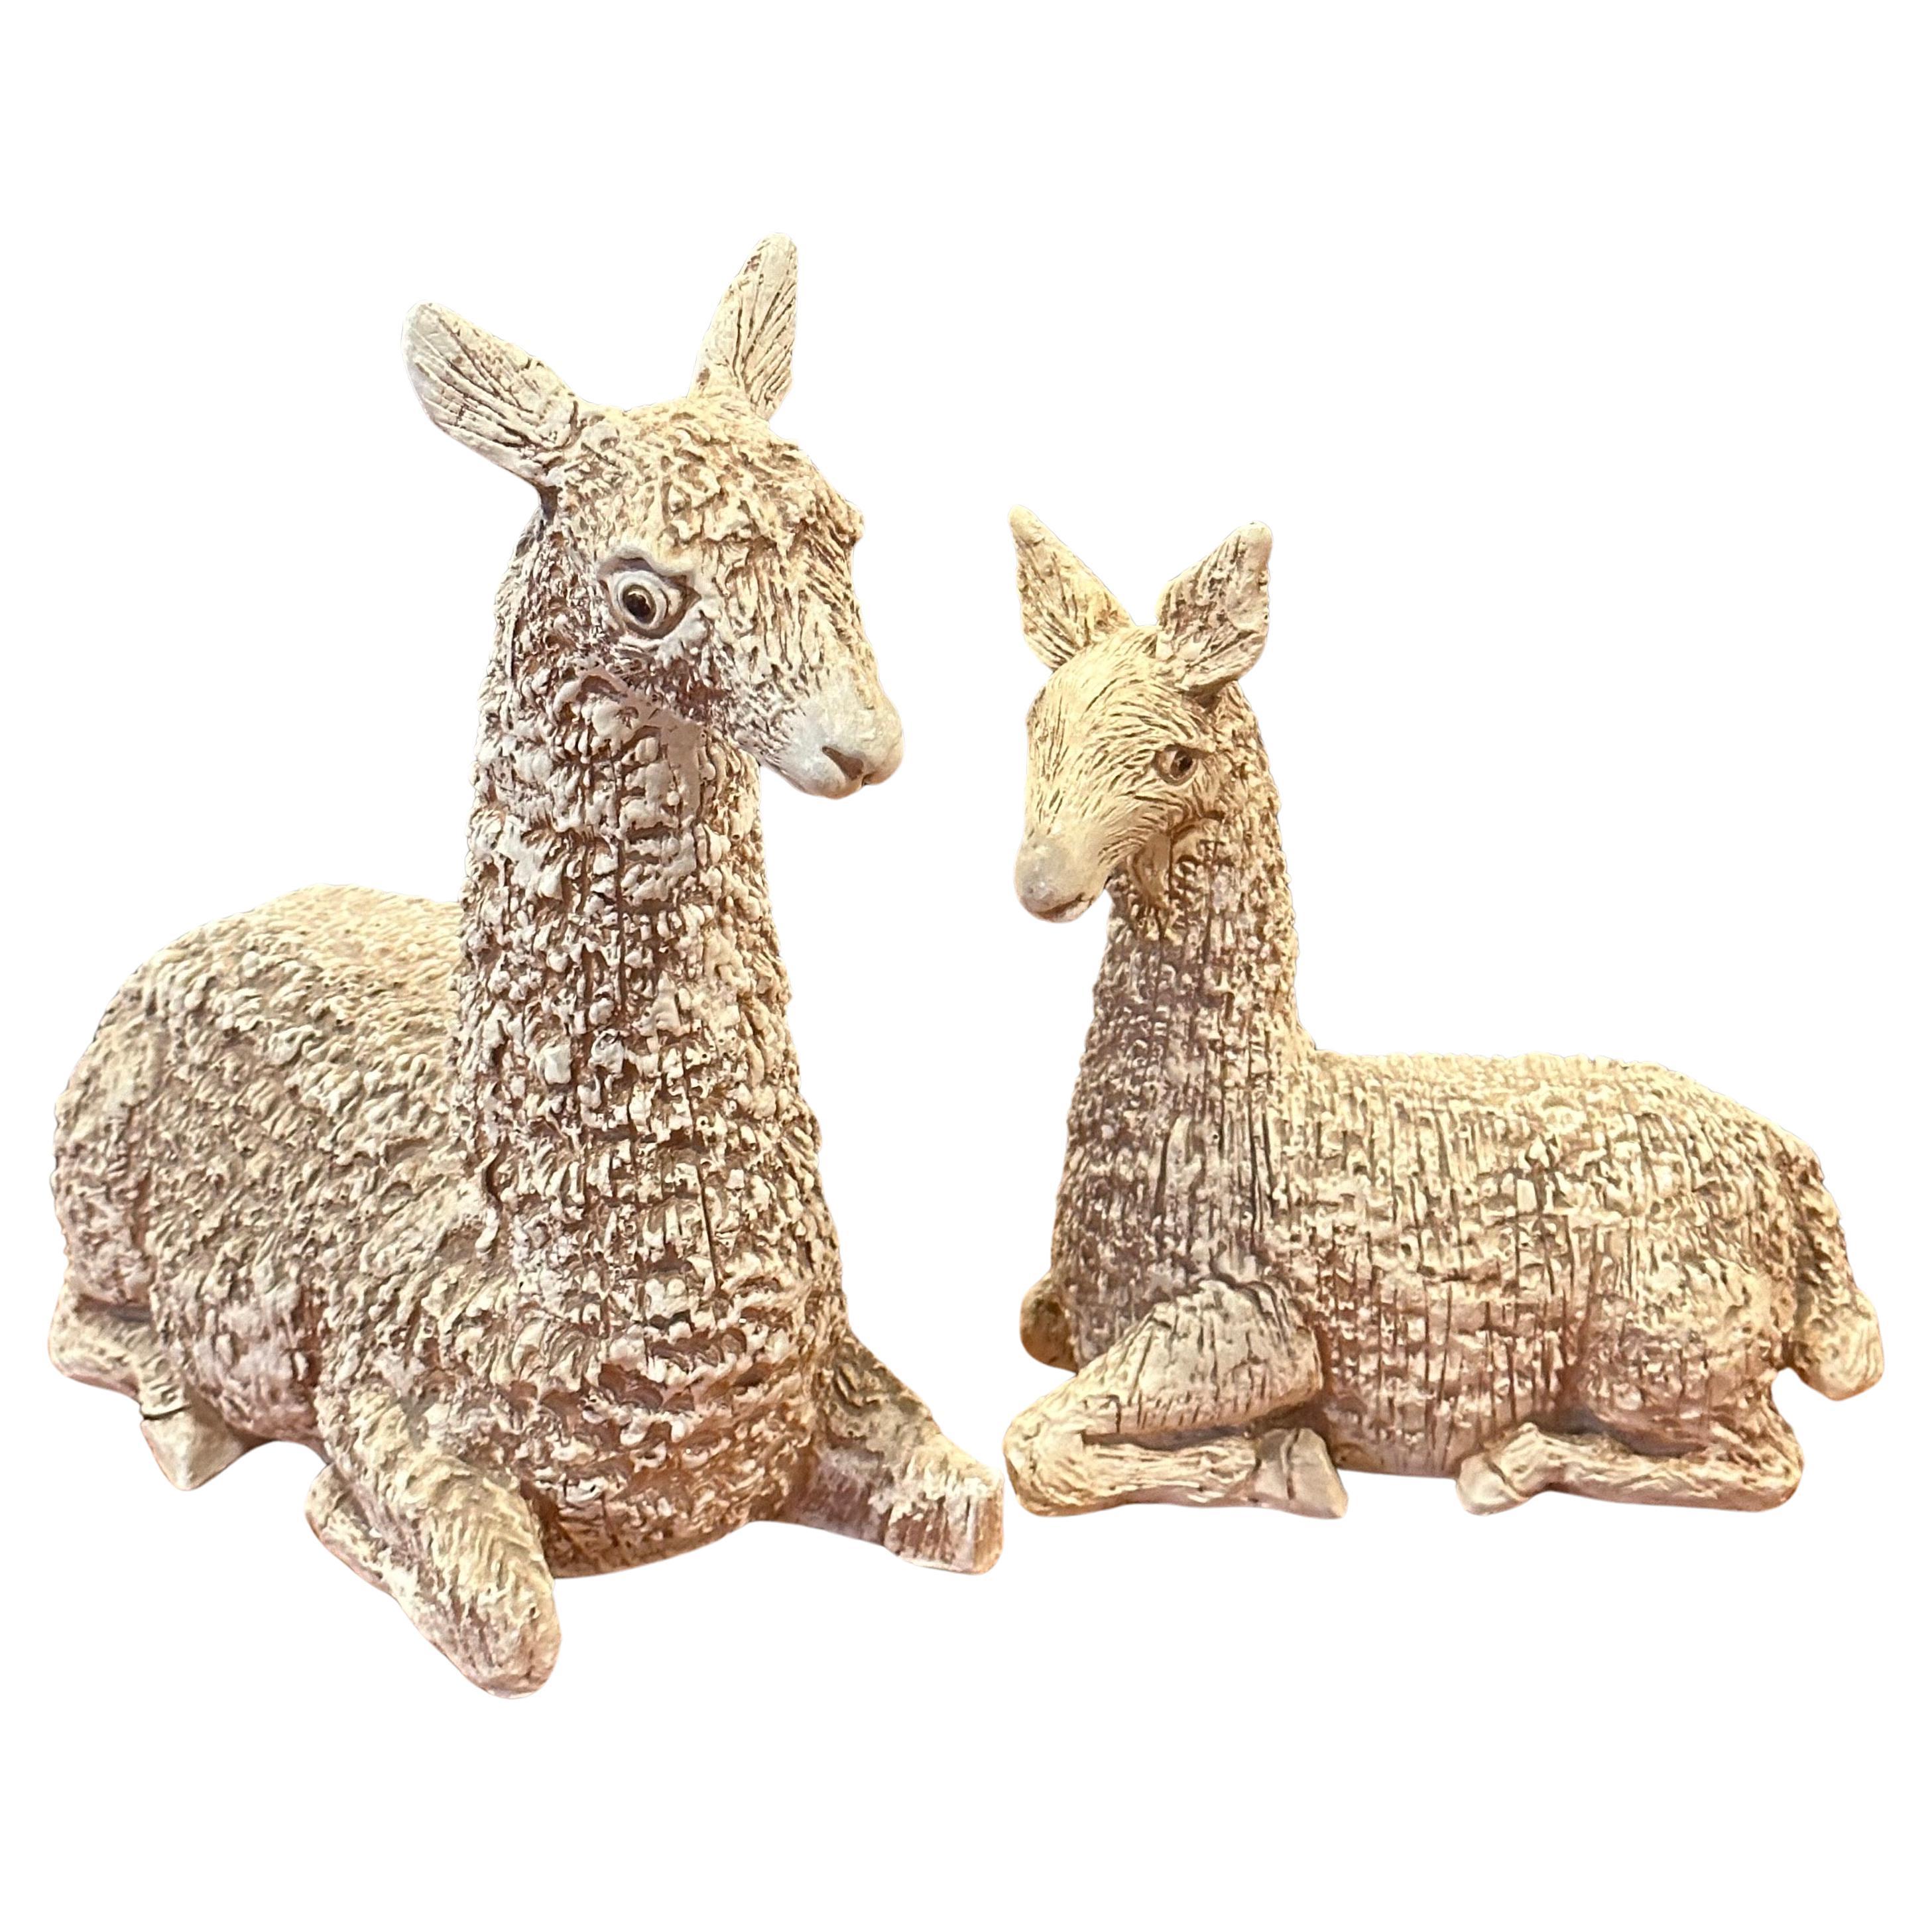 Substantial Pair of Mid-Century Llamas by Jaru